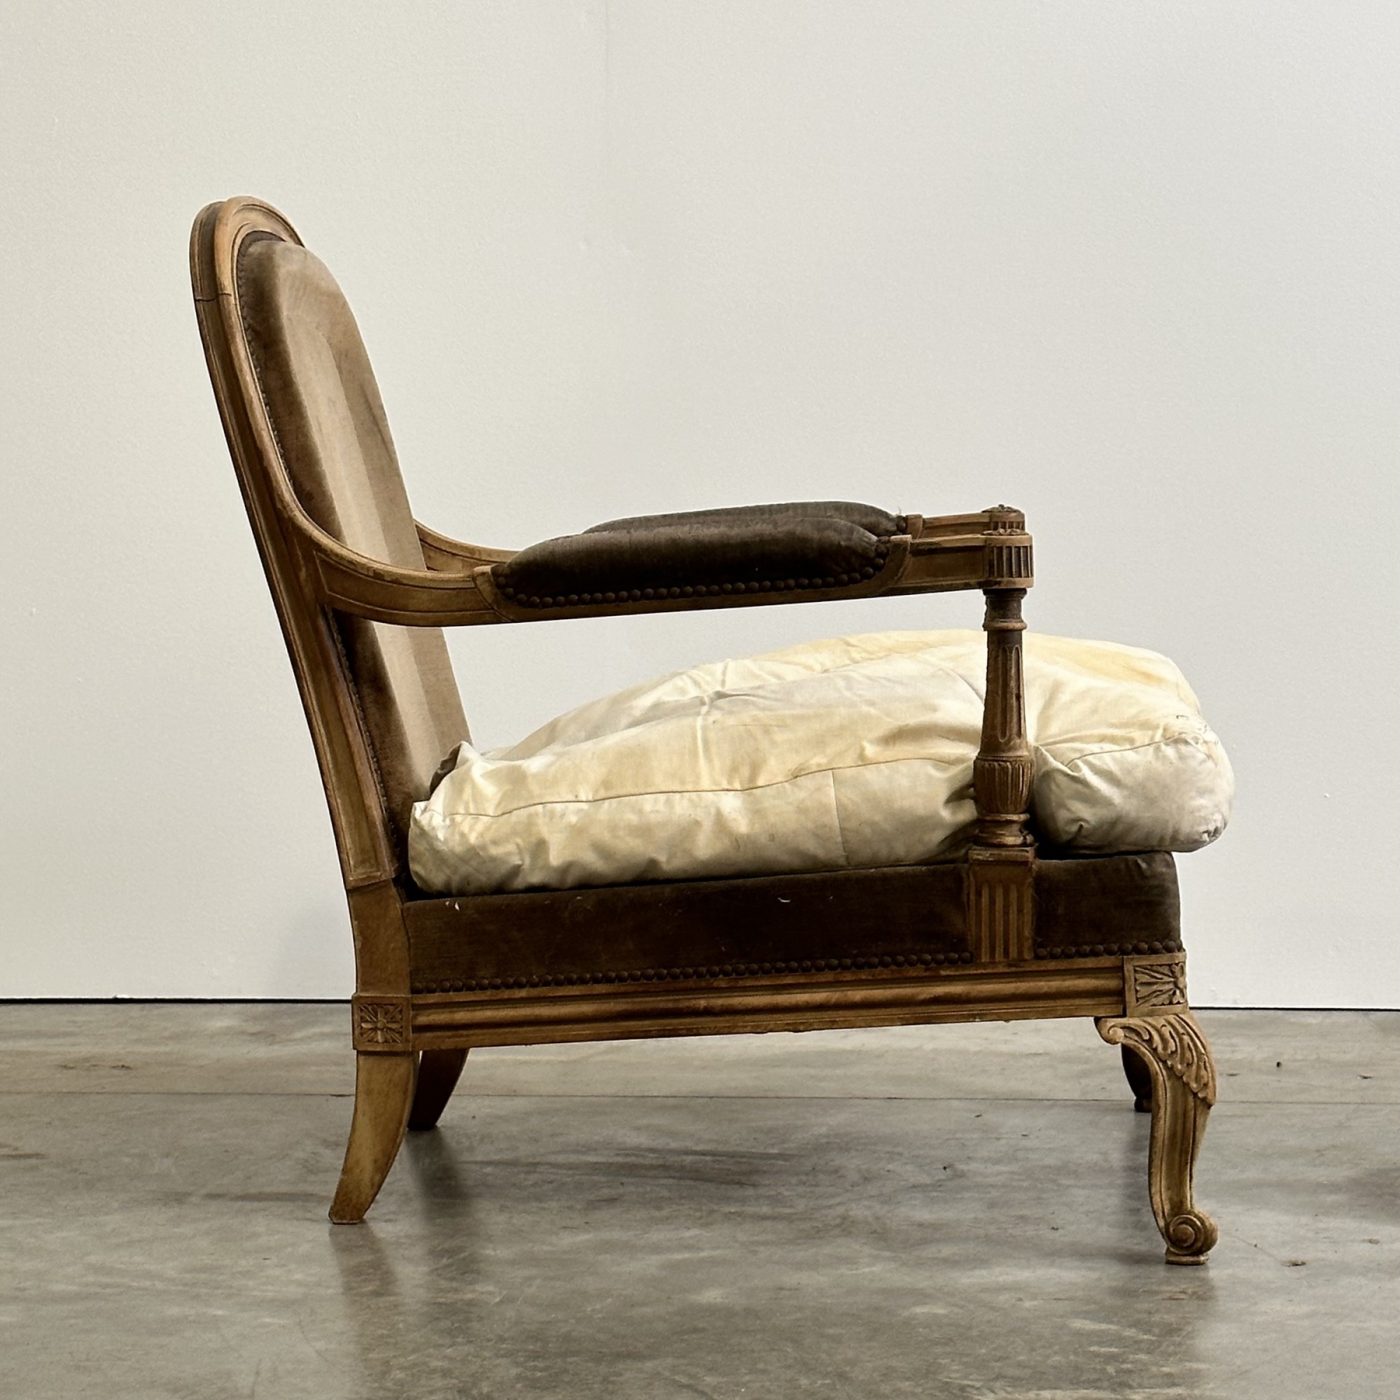 objet-vagabond-armchair0005